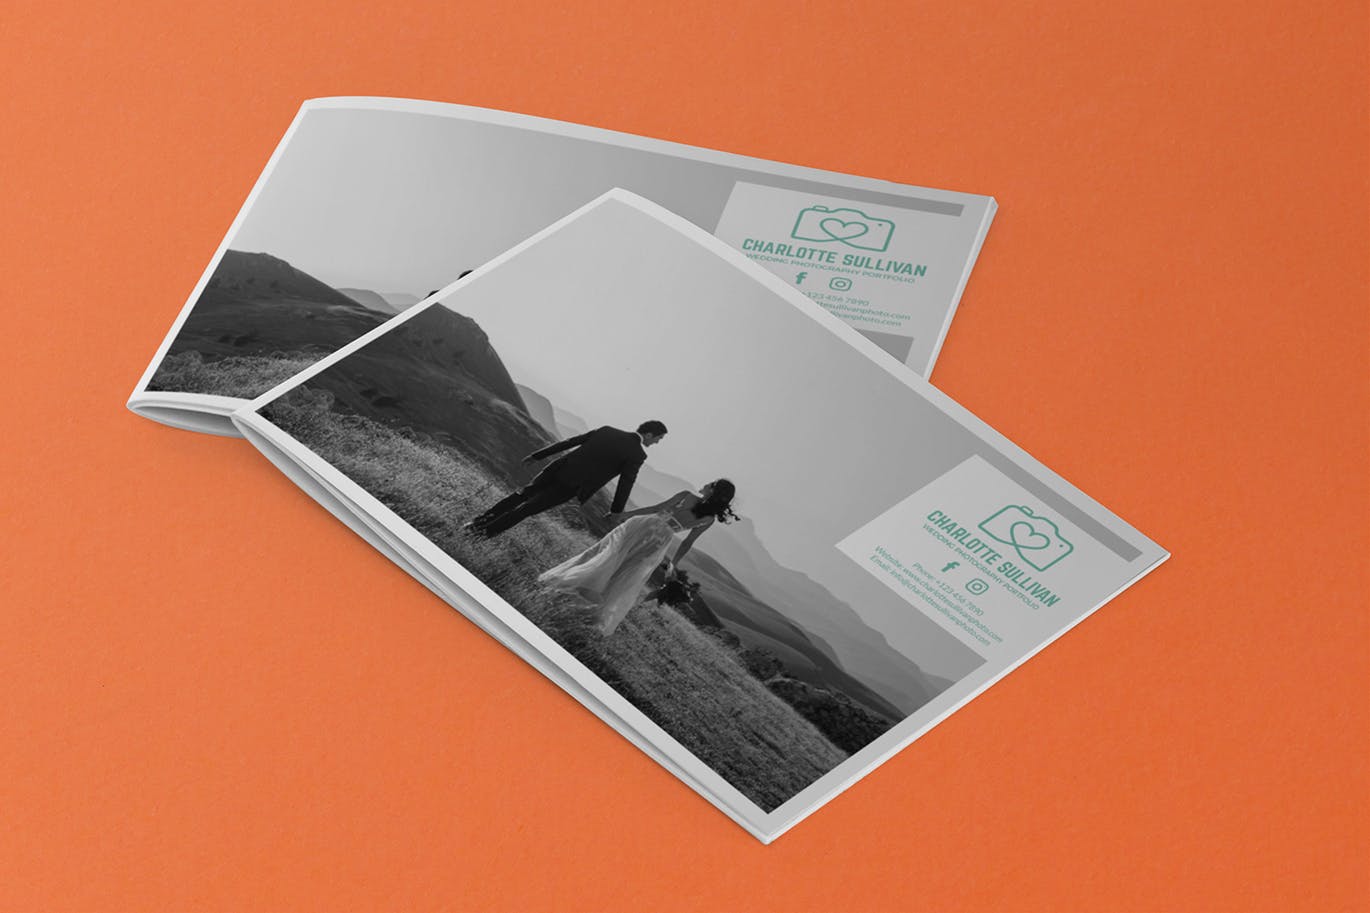 美国信纸尺寸宣传册叠放效果图样机16图库精选 US Half Letter 2 Covers Brochure Mockup插图(2)